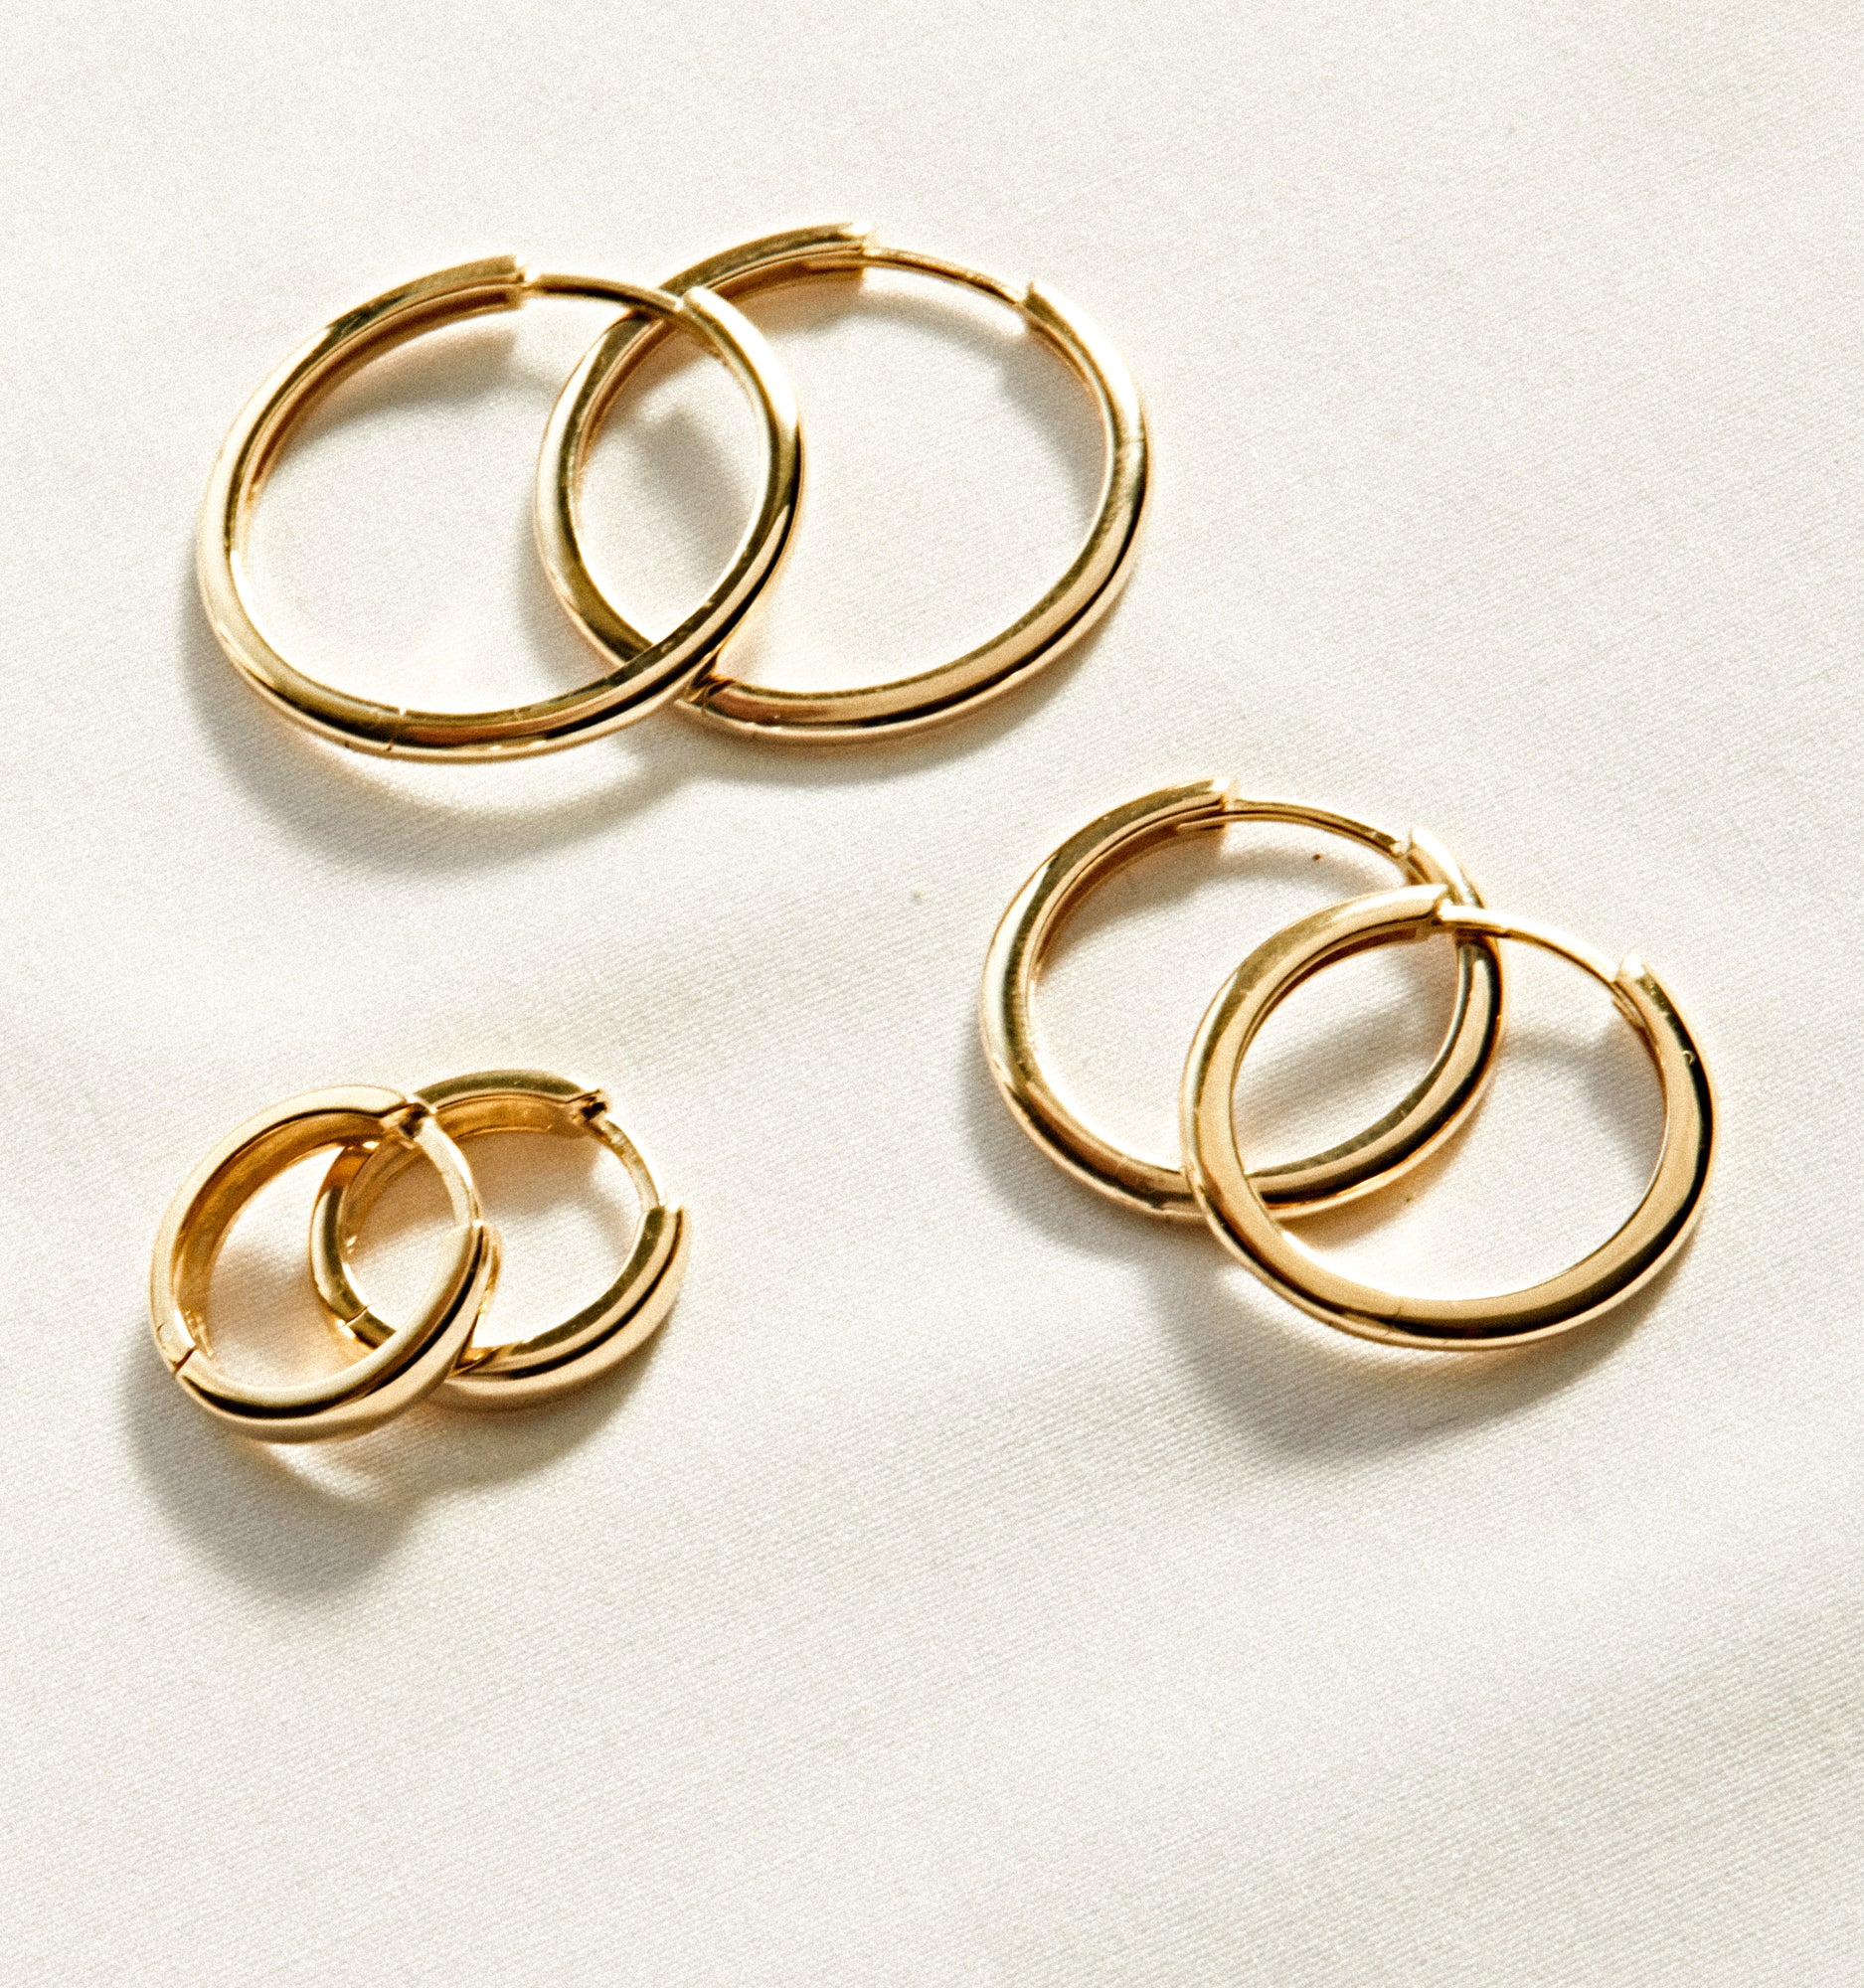 14k Solid Gold Hoop Earrings - Small 15mm